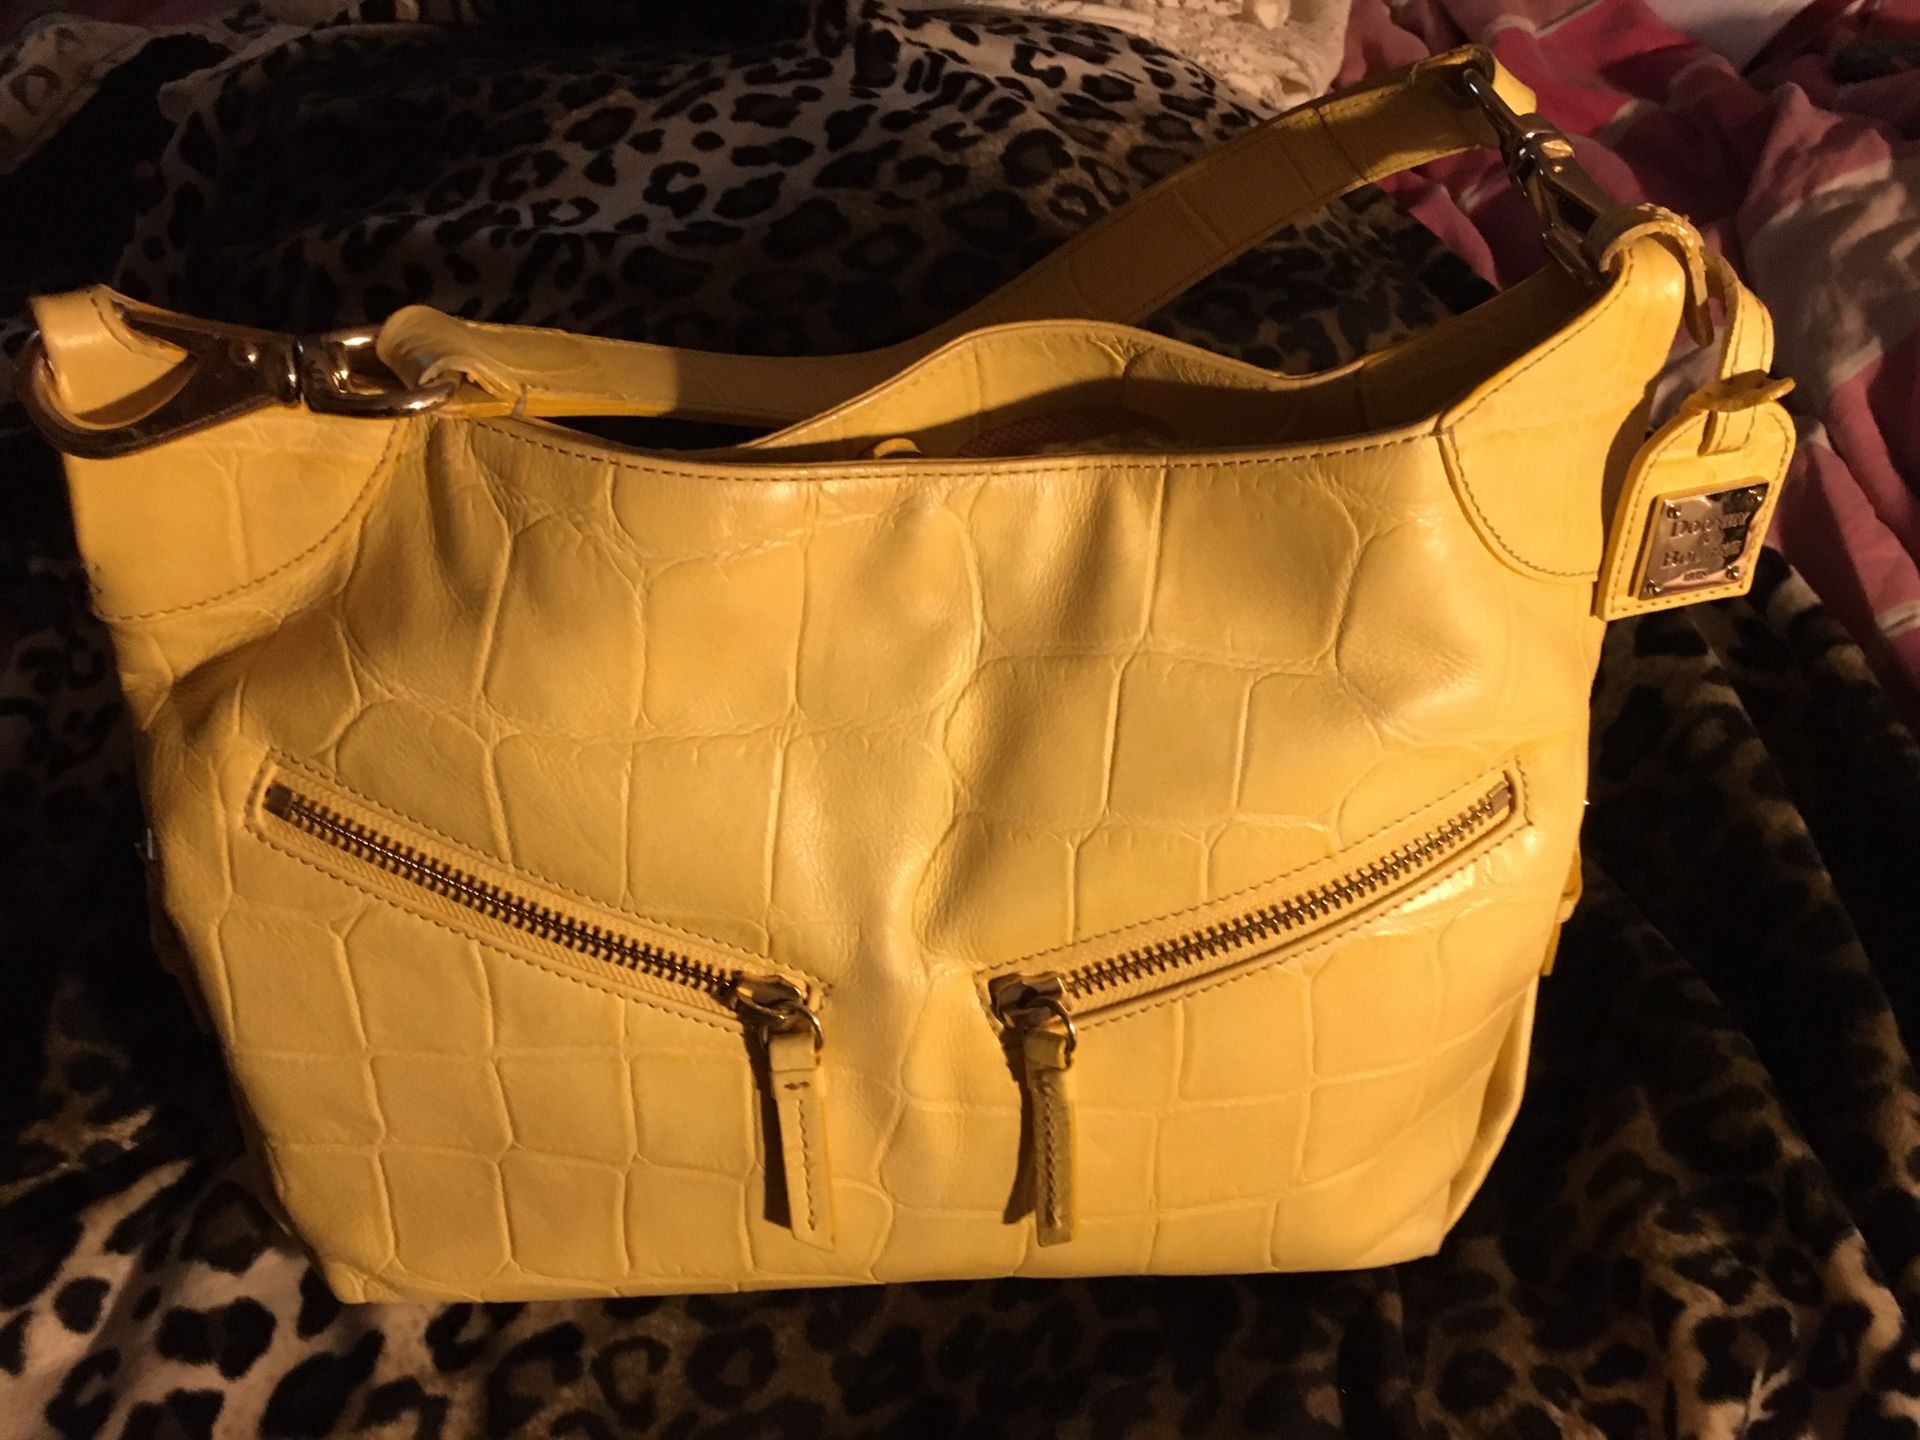 Dooney & Bourke yellow leather croc purse